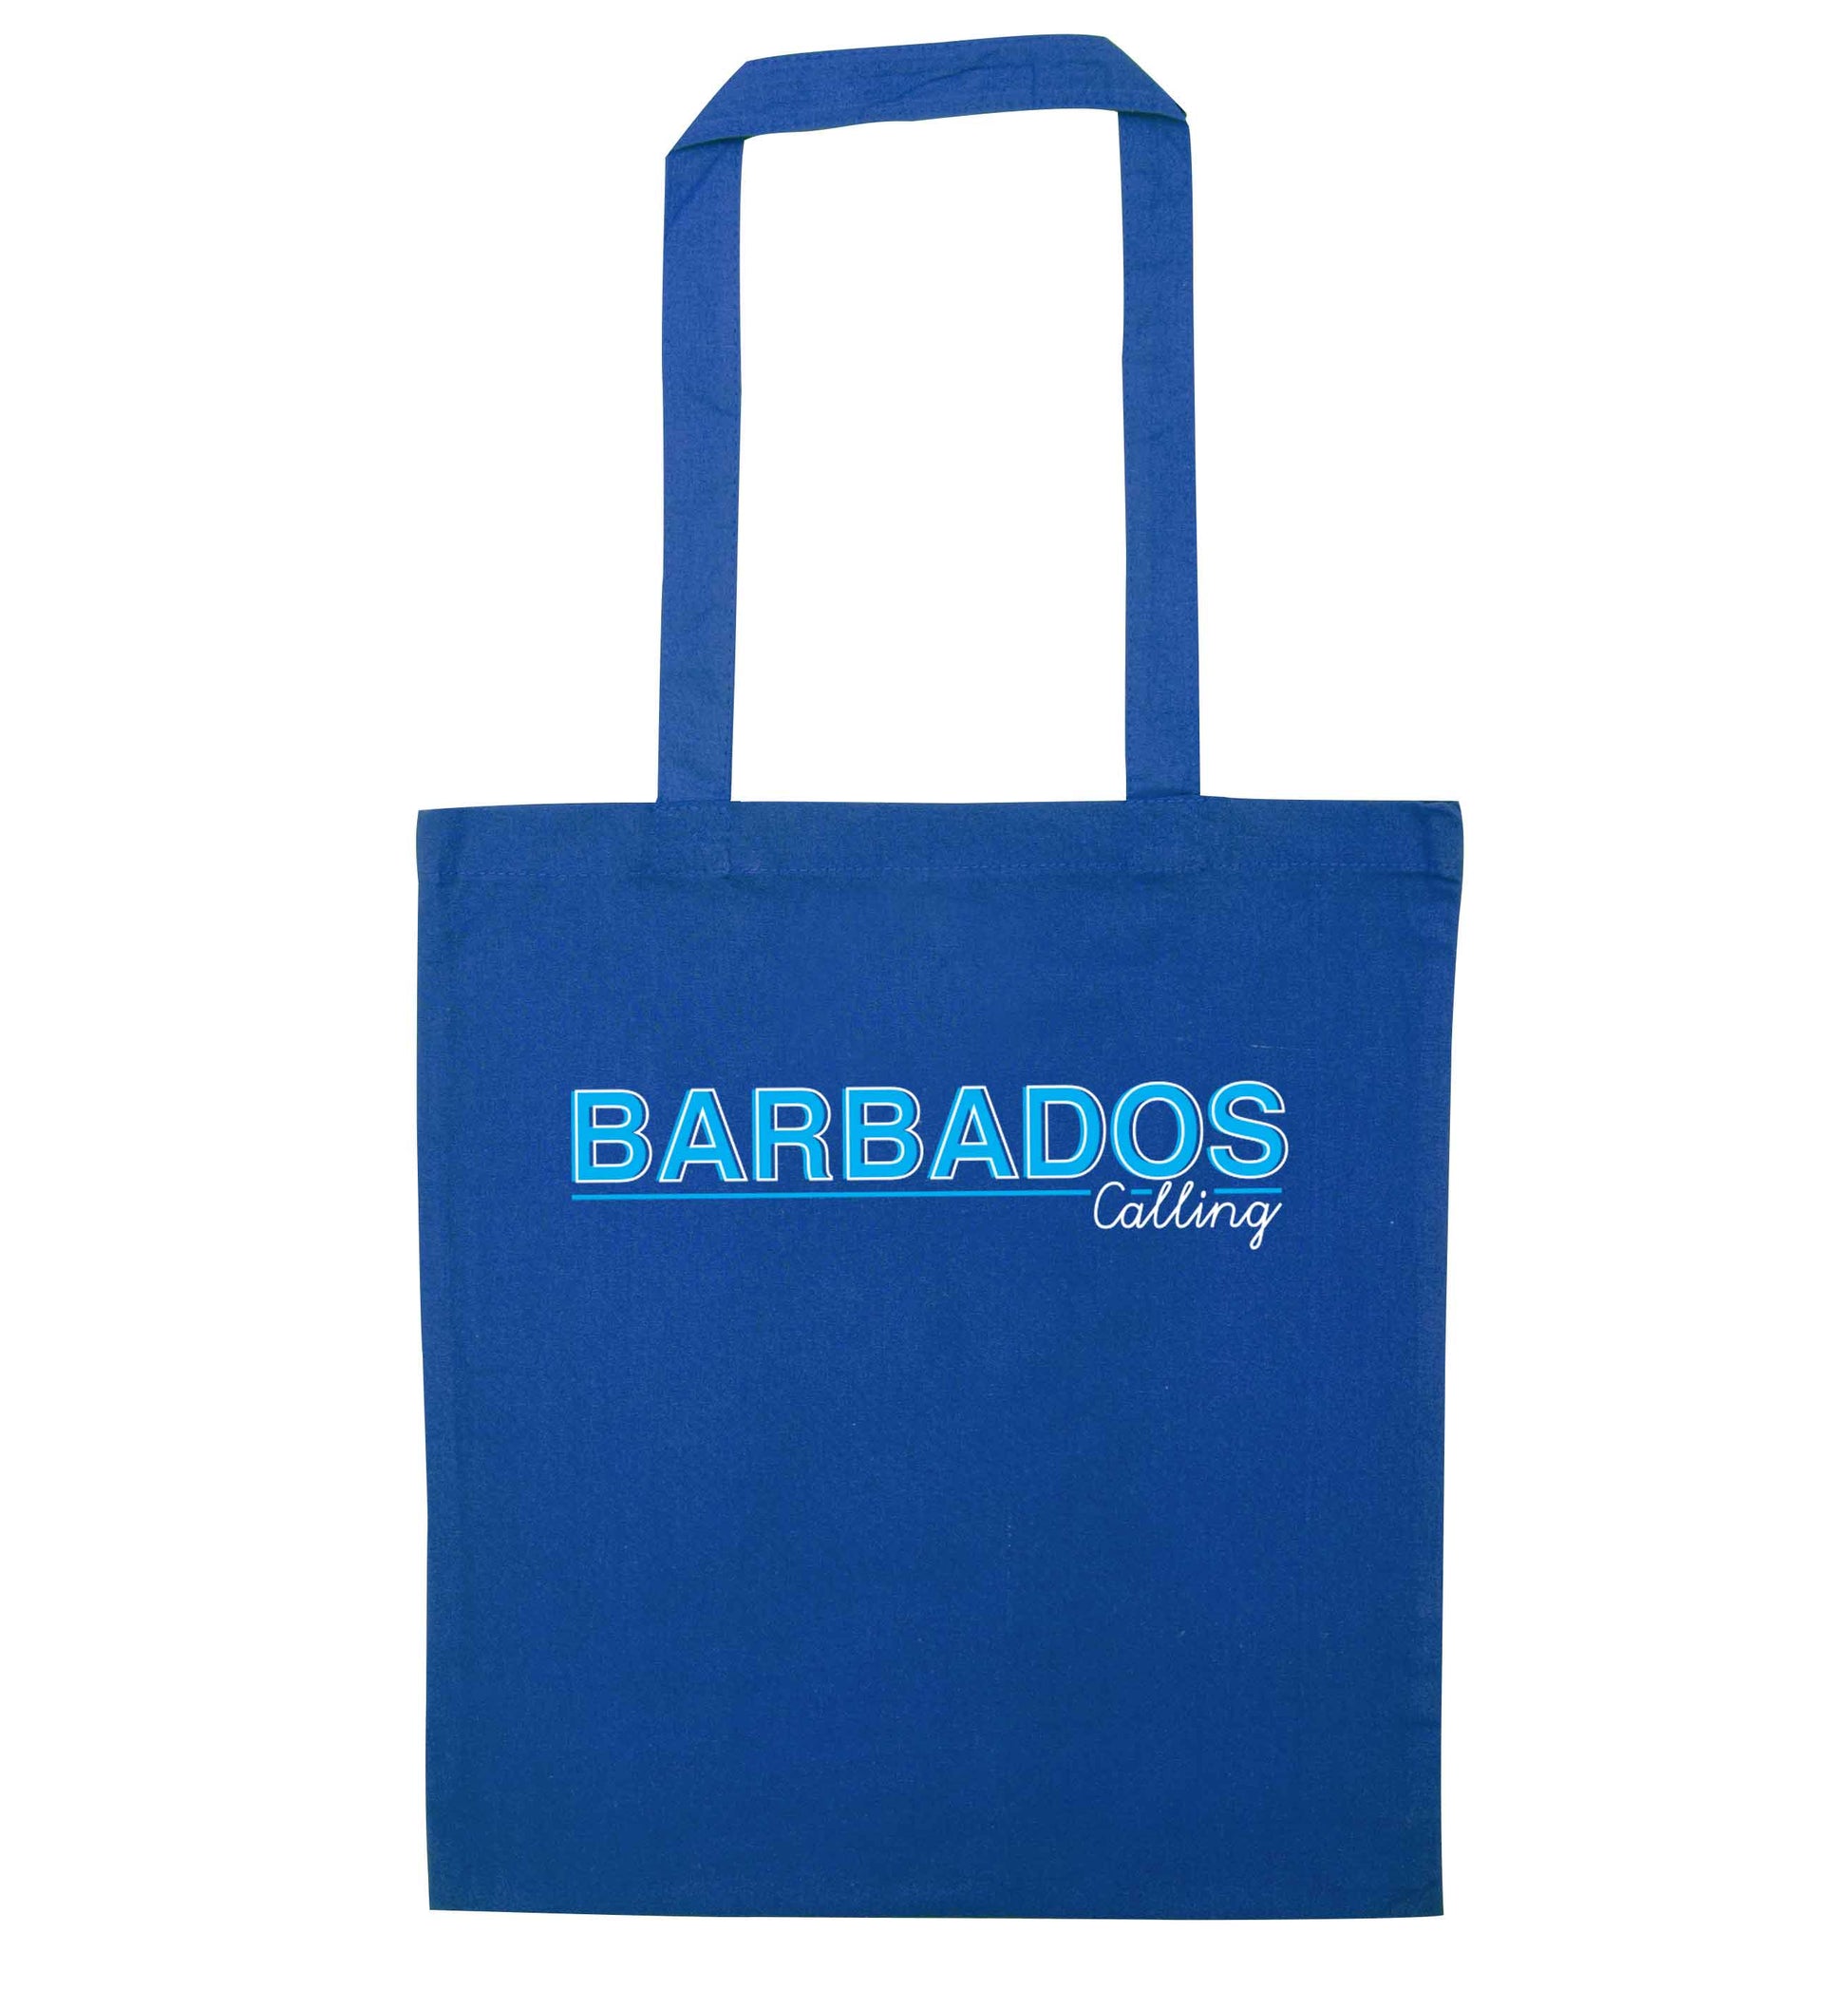 Barbados calling blue tote bag